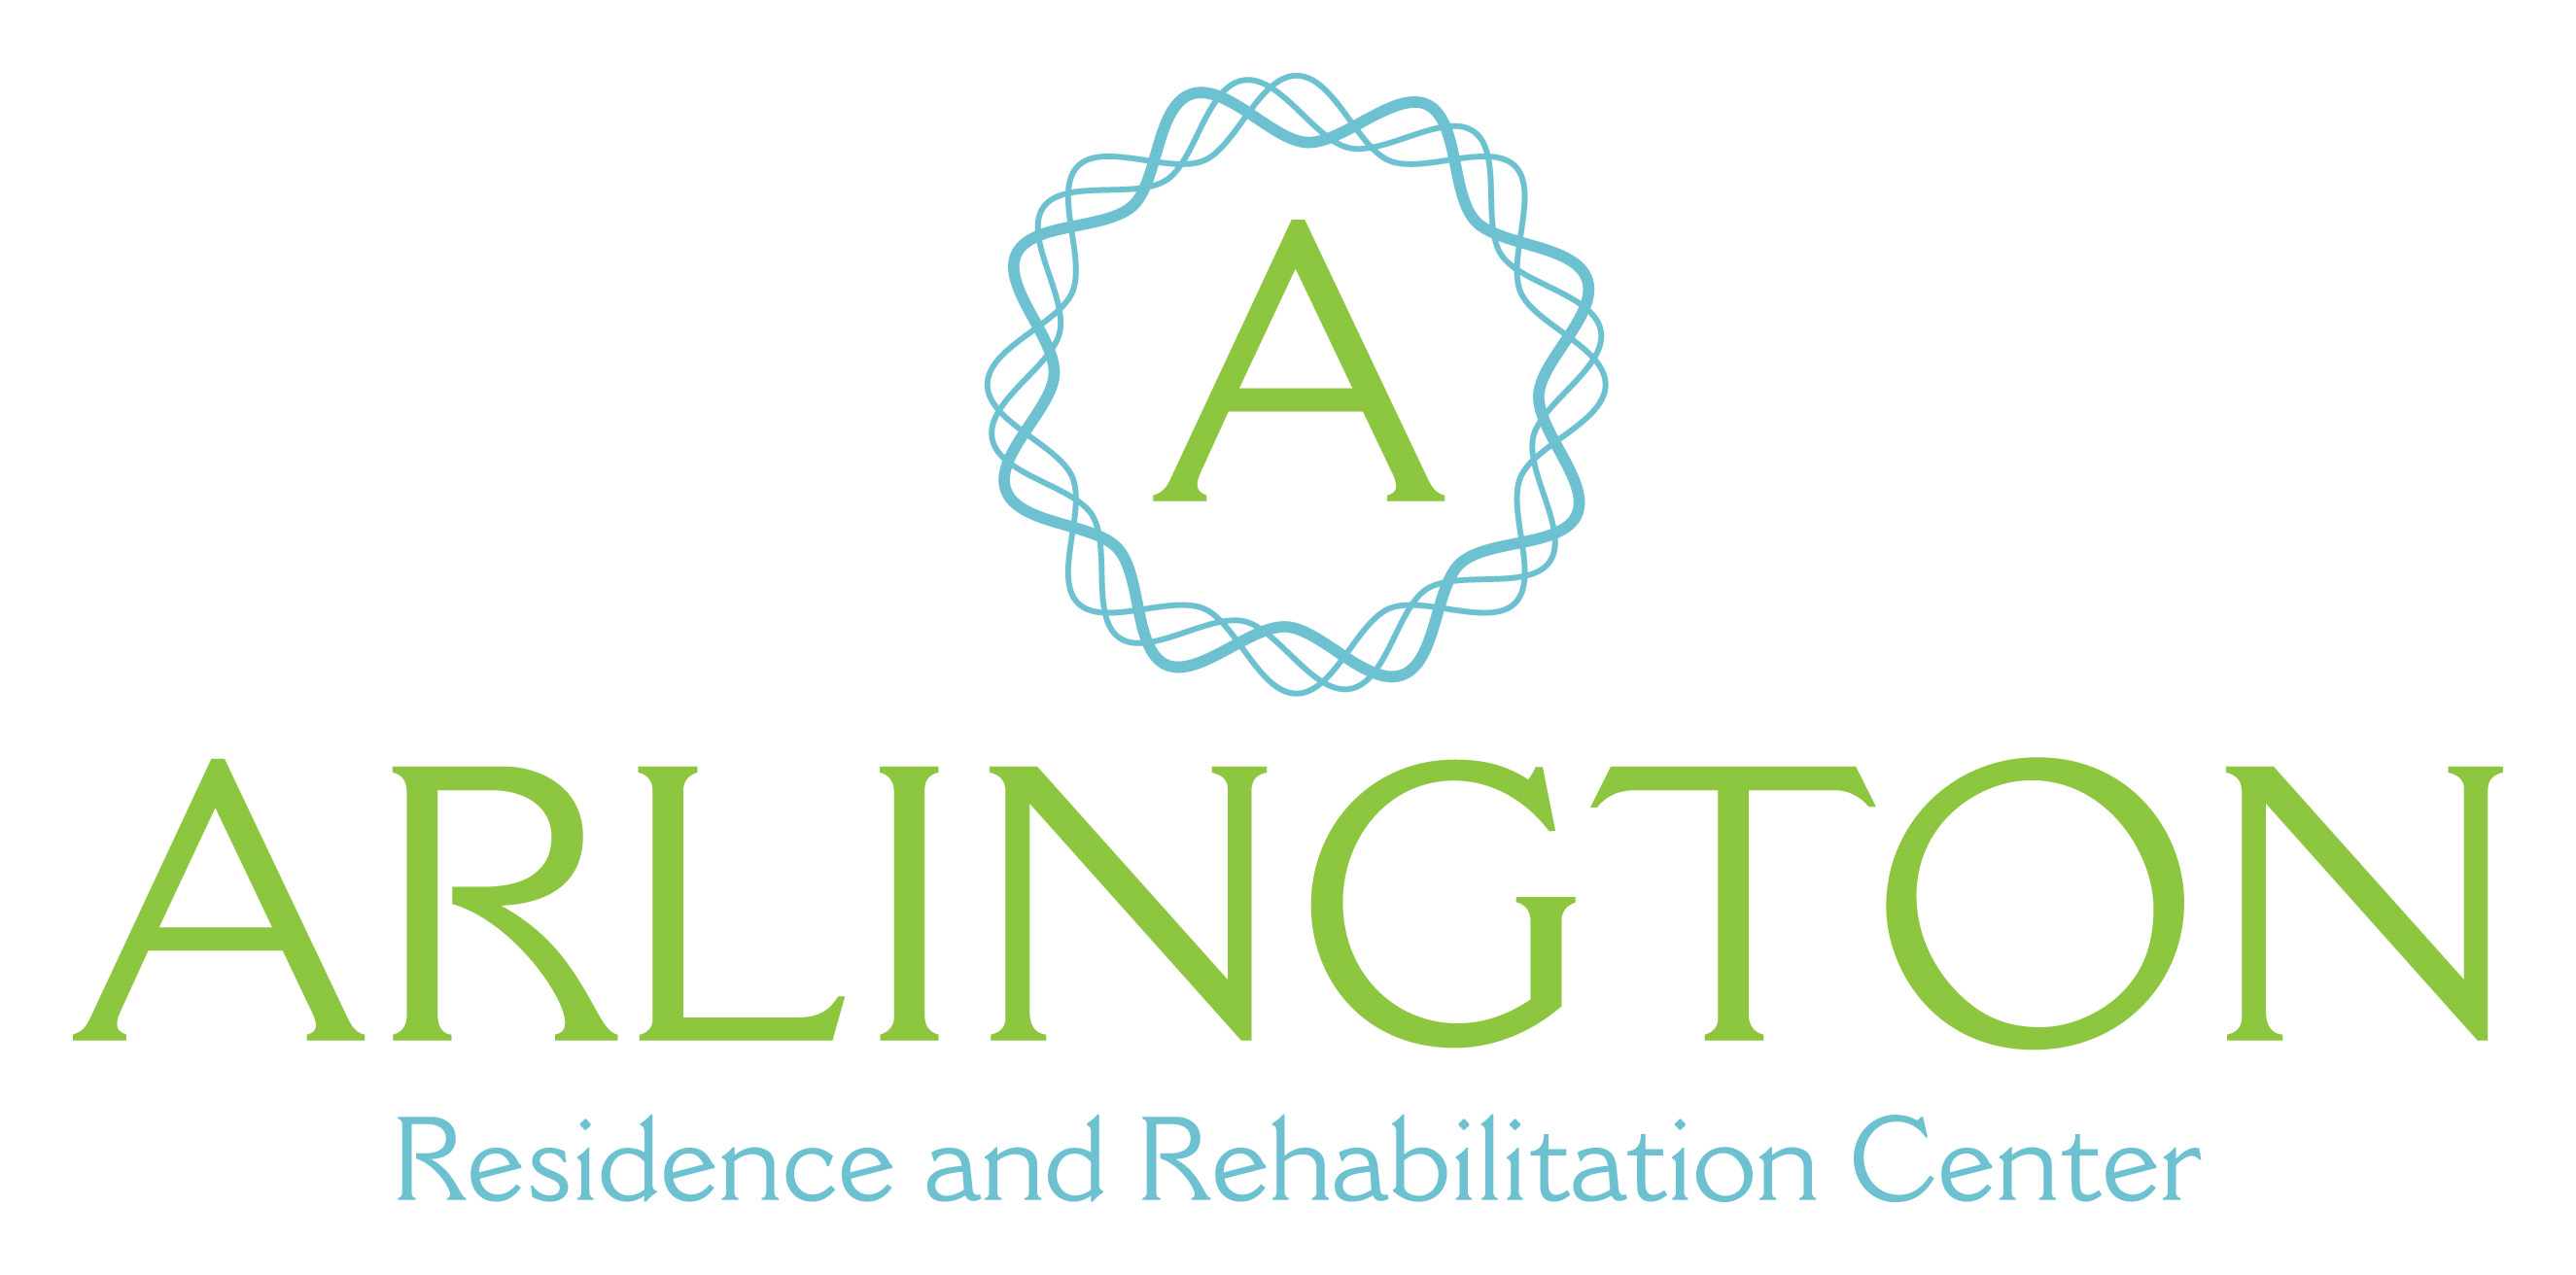 http://pressreleaseheadlines.com/wp-content/Cimy_User_Extra_Fields/Arlington Residence and Rehabilitation Center/arlington-logo.jpg